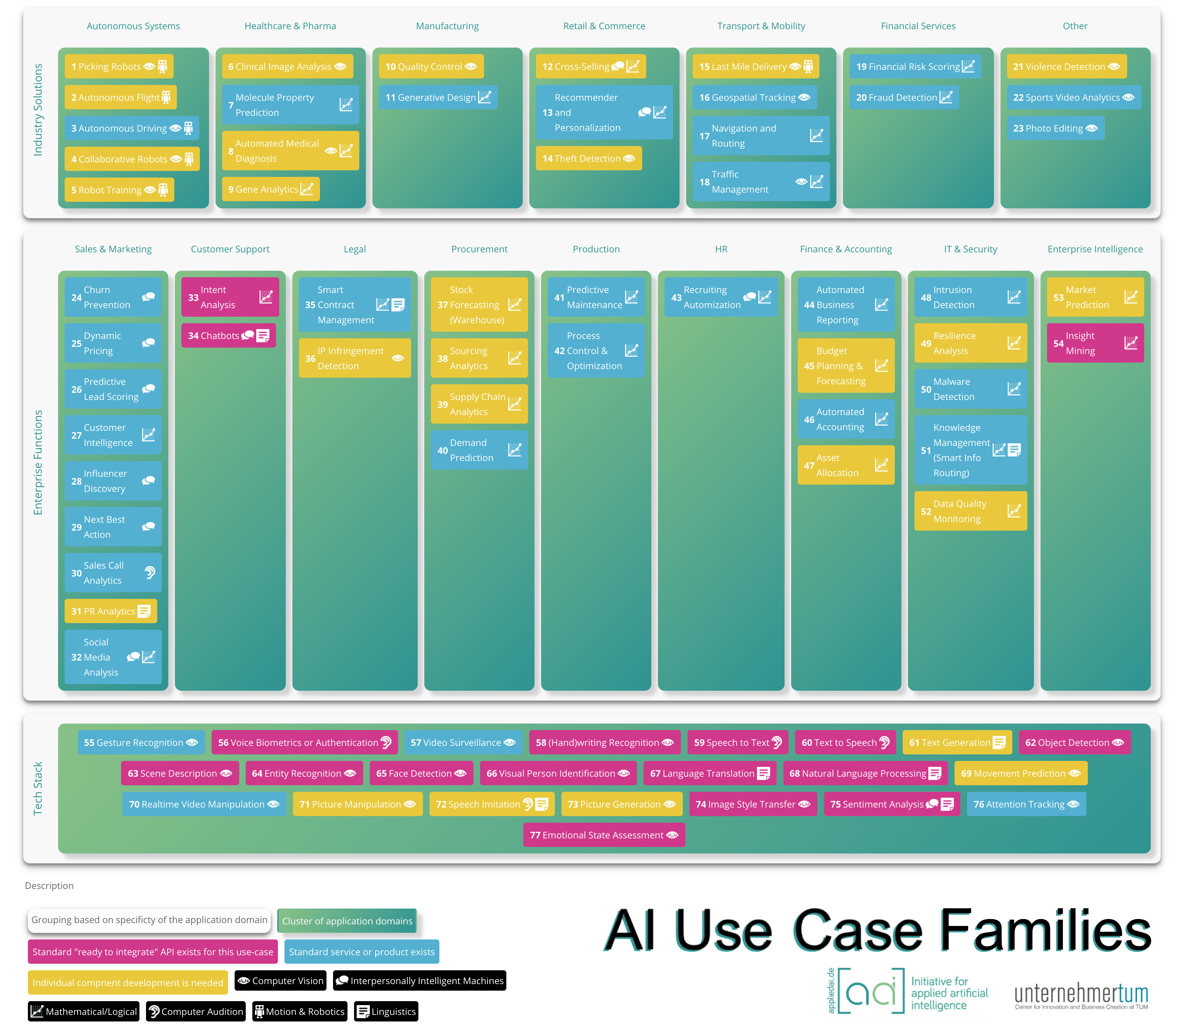 appliedAI_Use_Case_Families